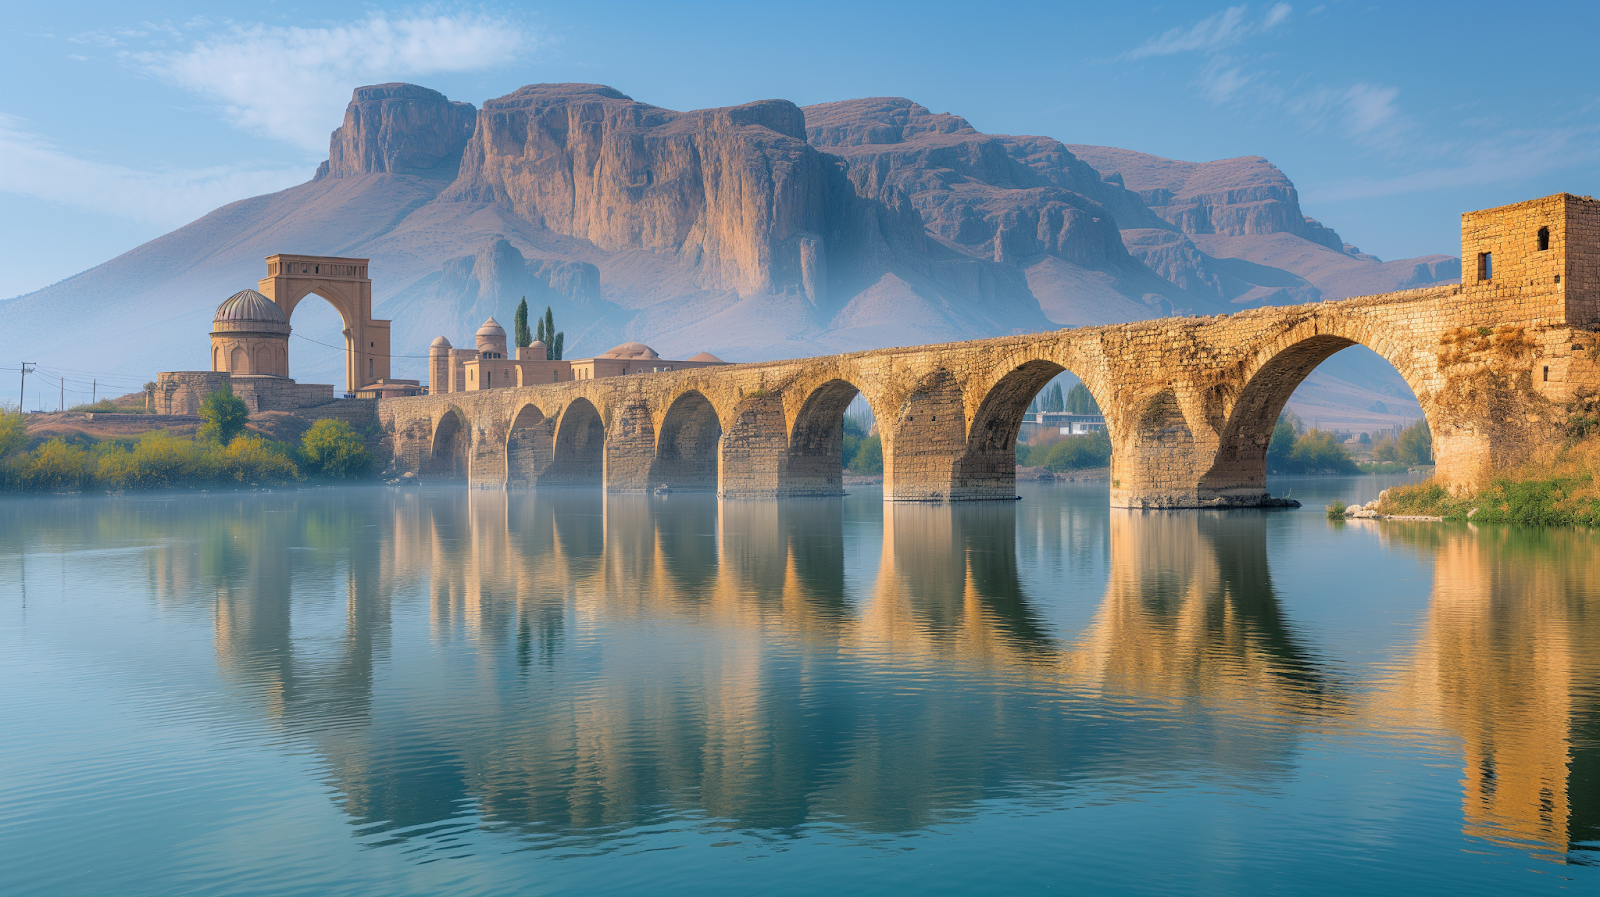 A bridge over the waters of Hasankeyf.